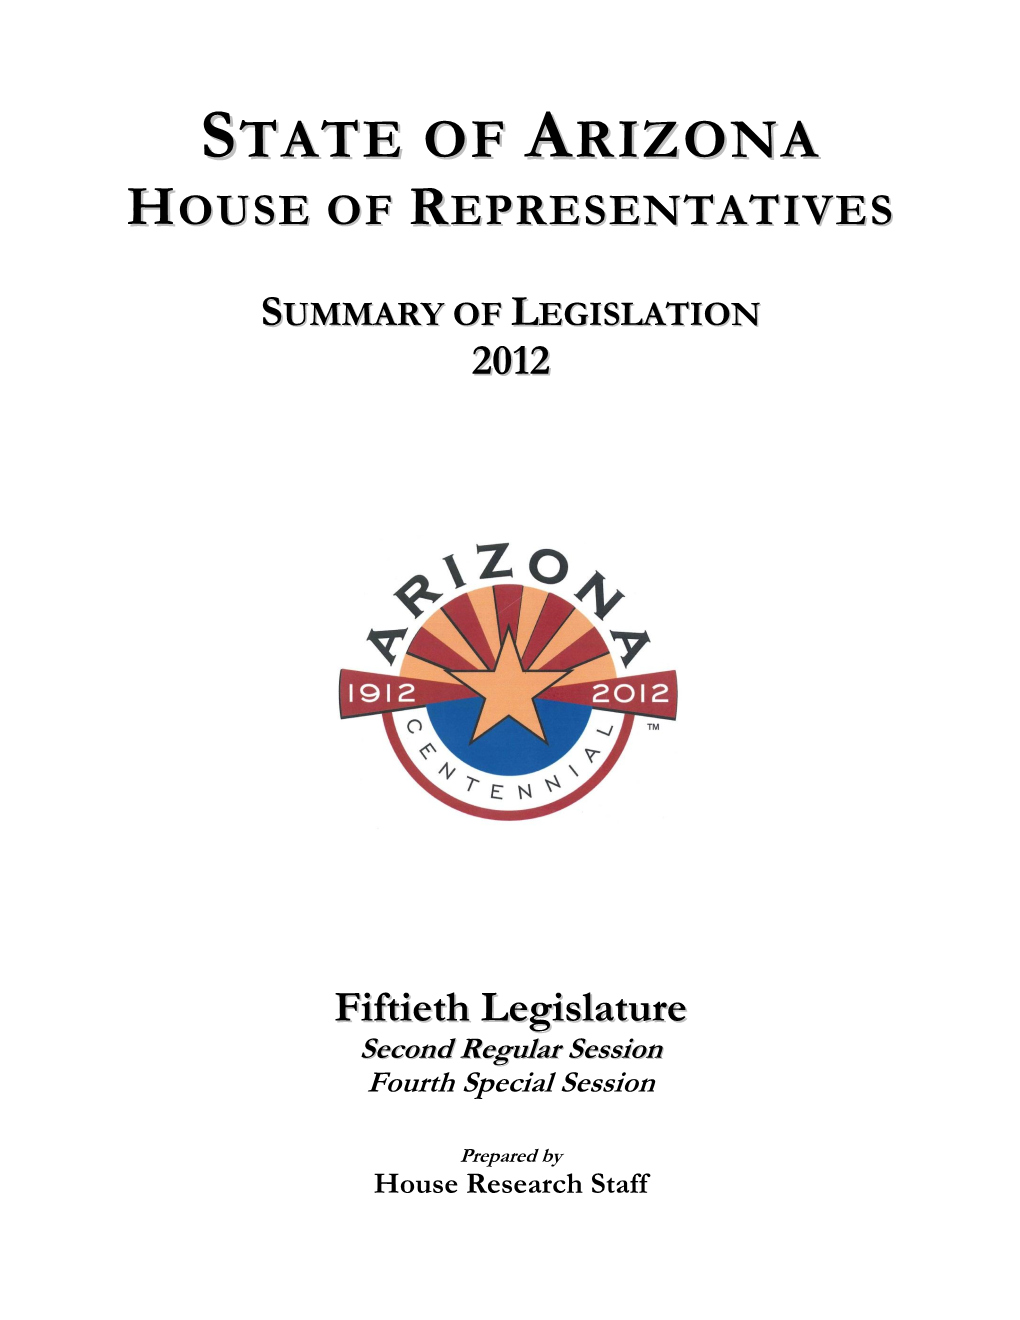 State of Arizona Fiftieth Legislature FY 2012-13